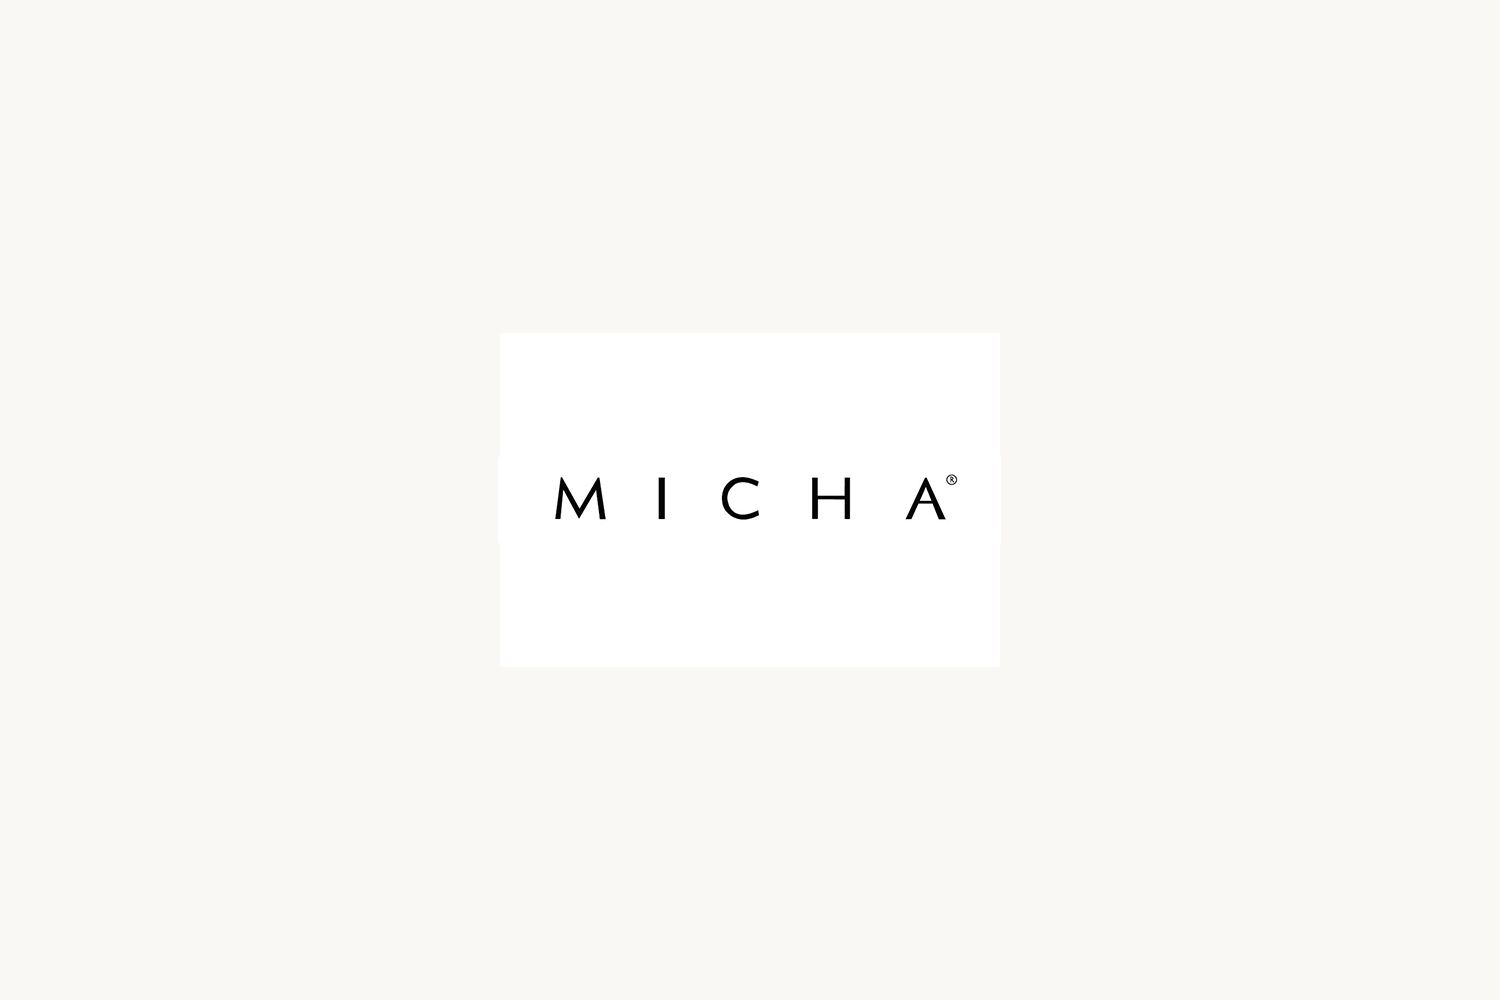 Micha